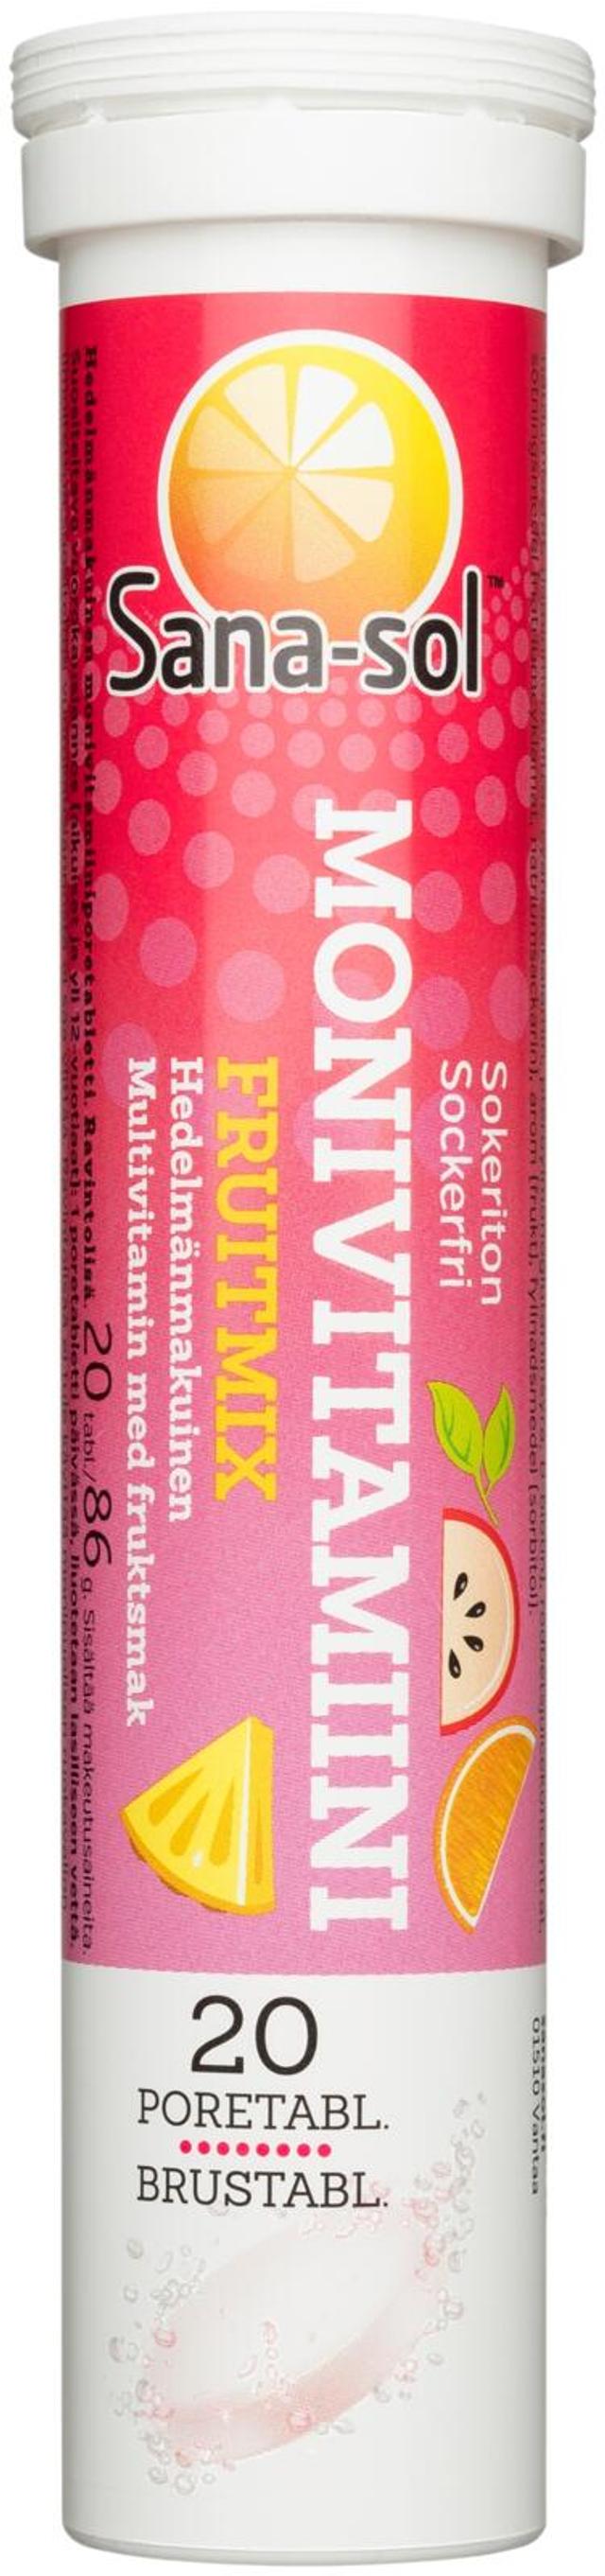 Sana-sol Monivitamiini Fruitmix sokeriton hedelmänmakuinen monivitamiiniporetabletti 20 poretablettia